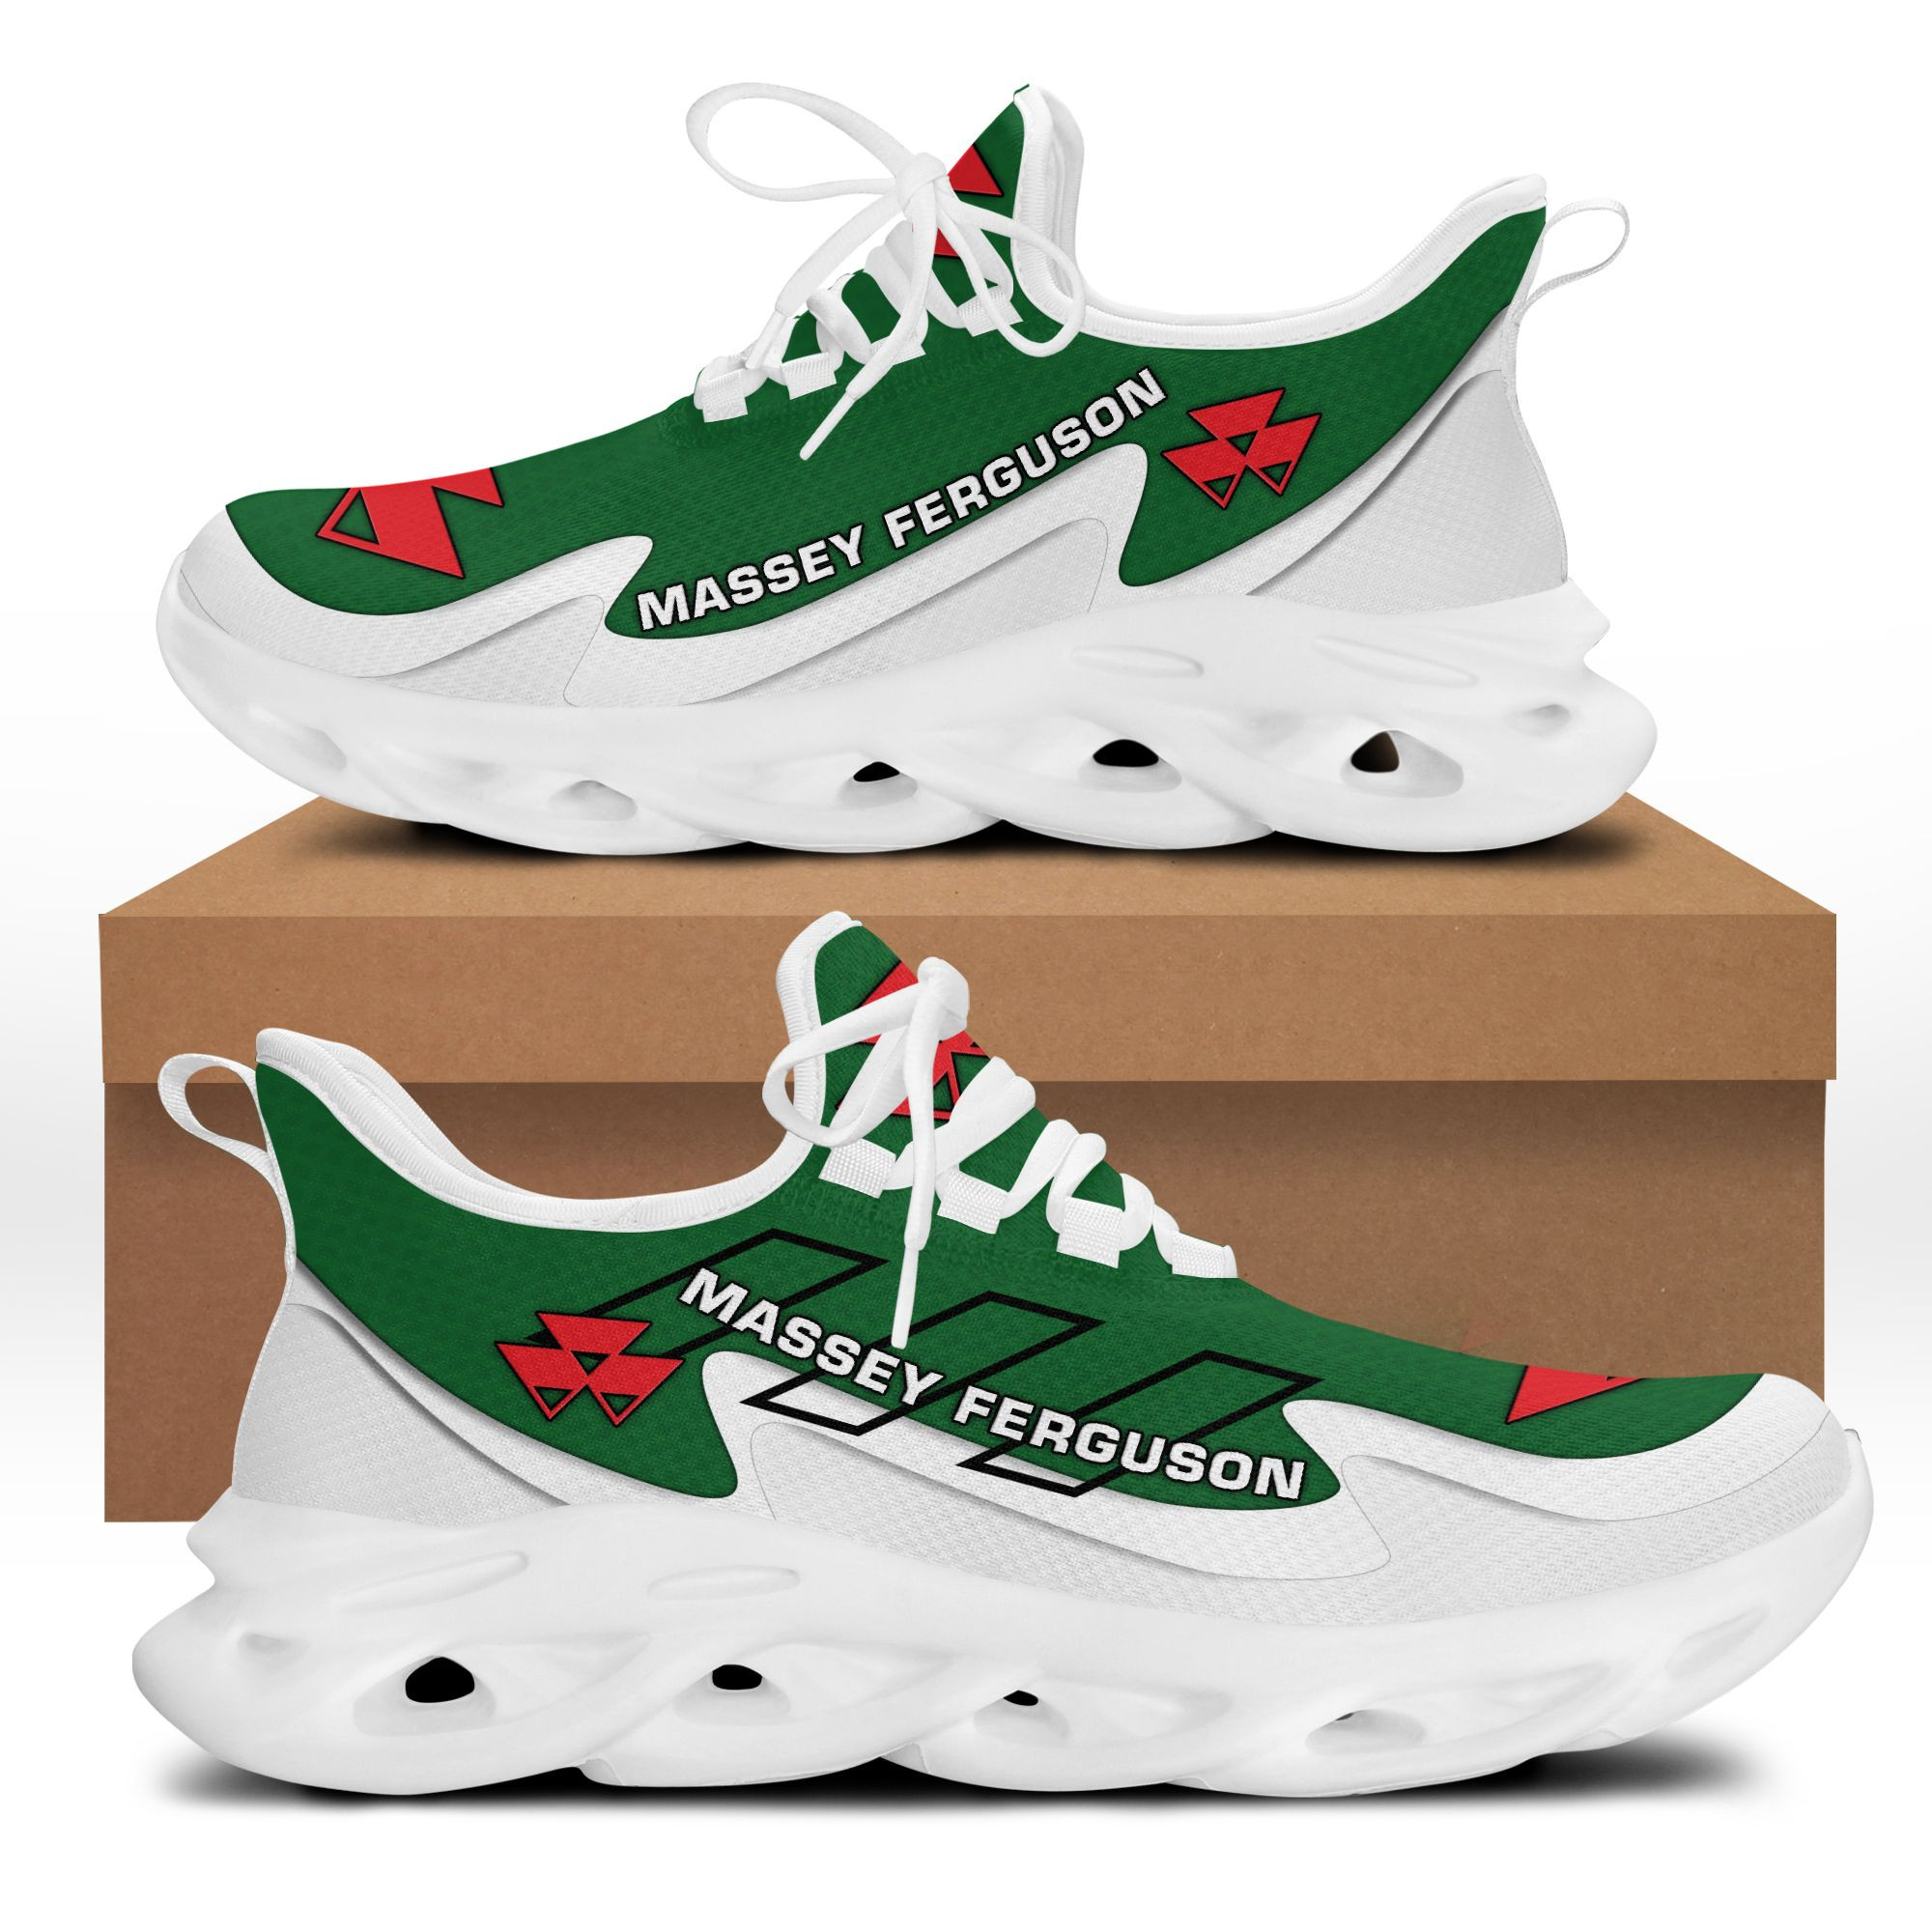 Massey Ferguson Bs Running Shoes Ver 4 (Green) – Ride Clothing Shop